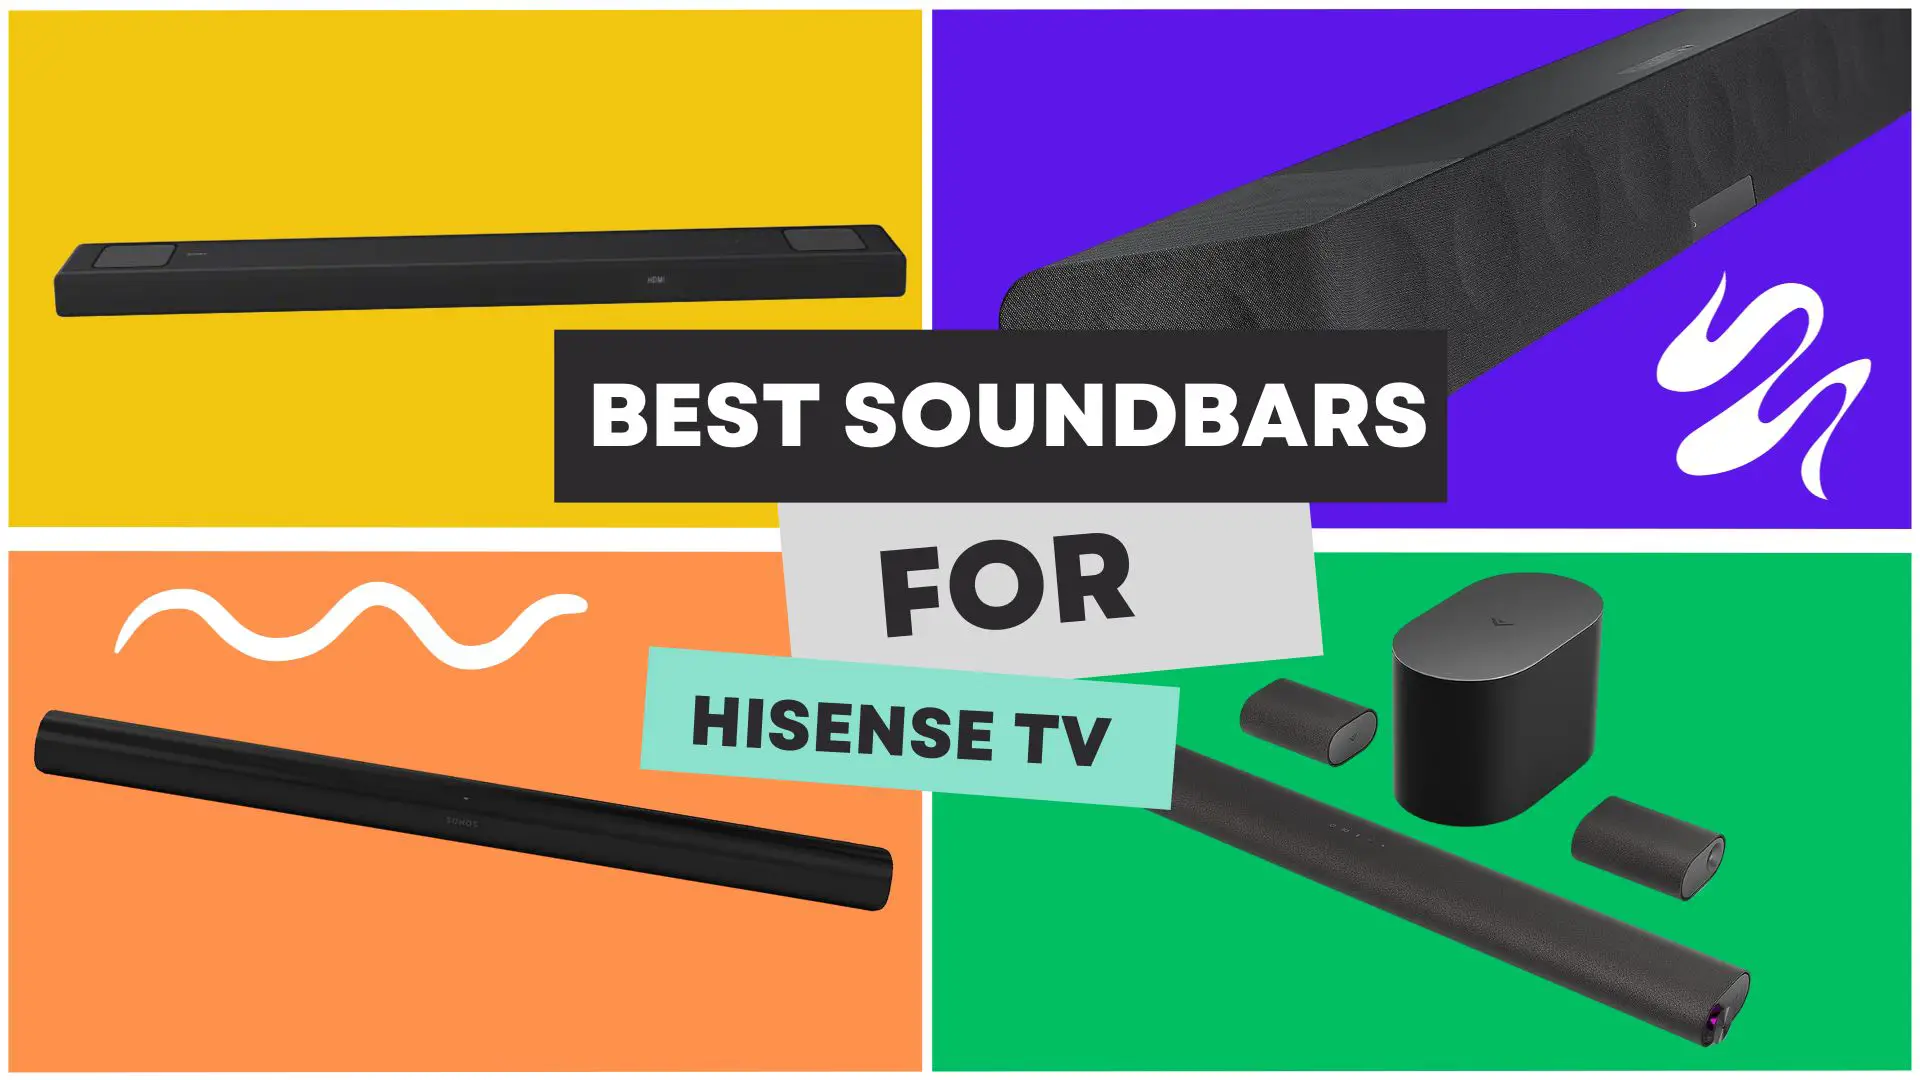 Best Soundbars for Hisense TV